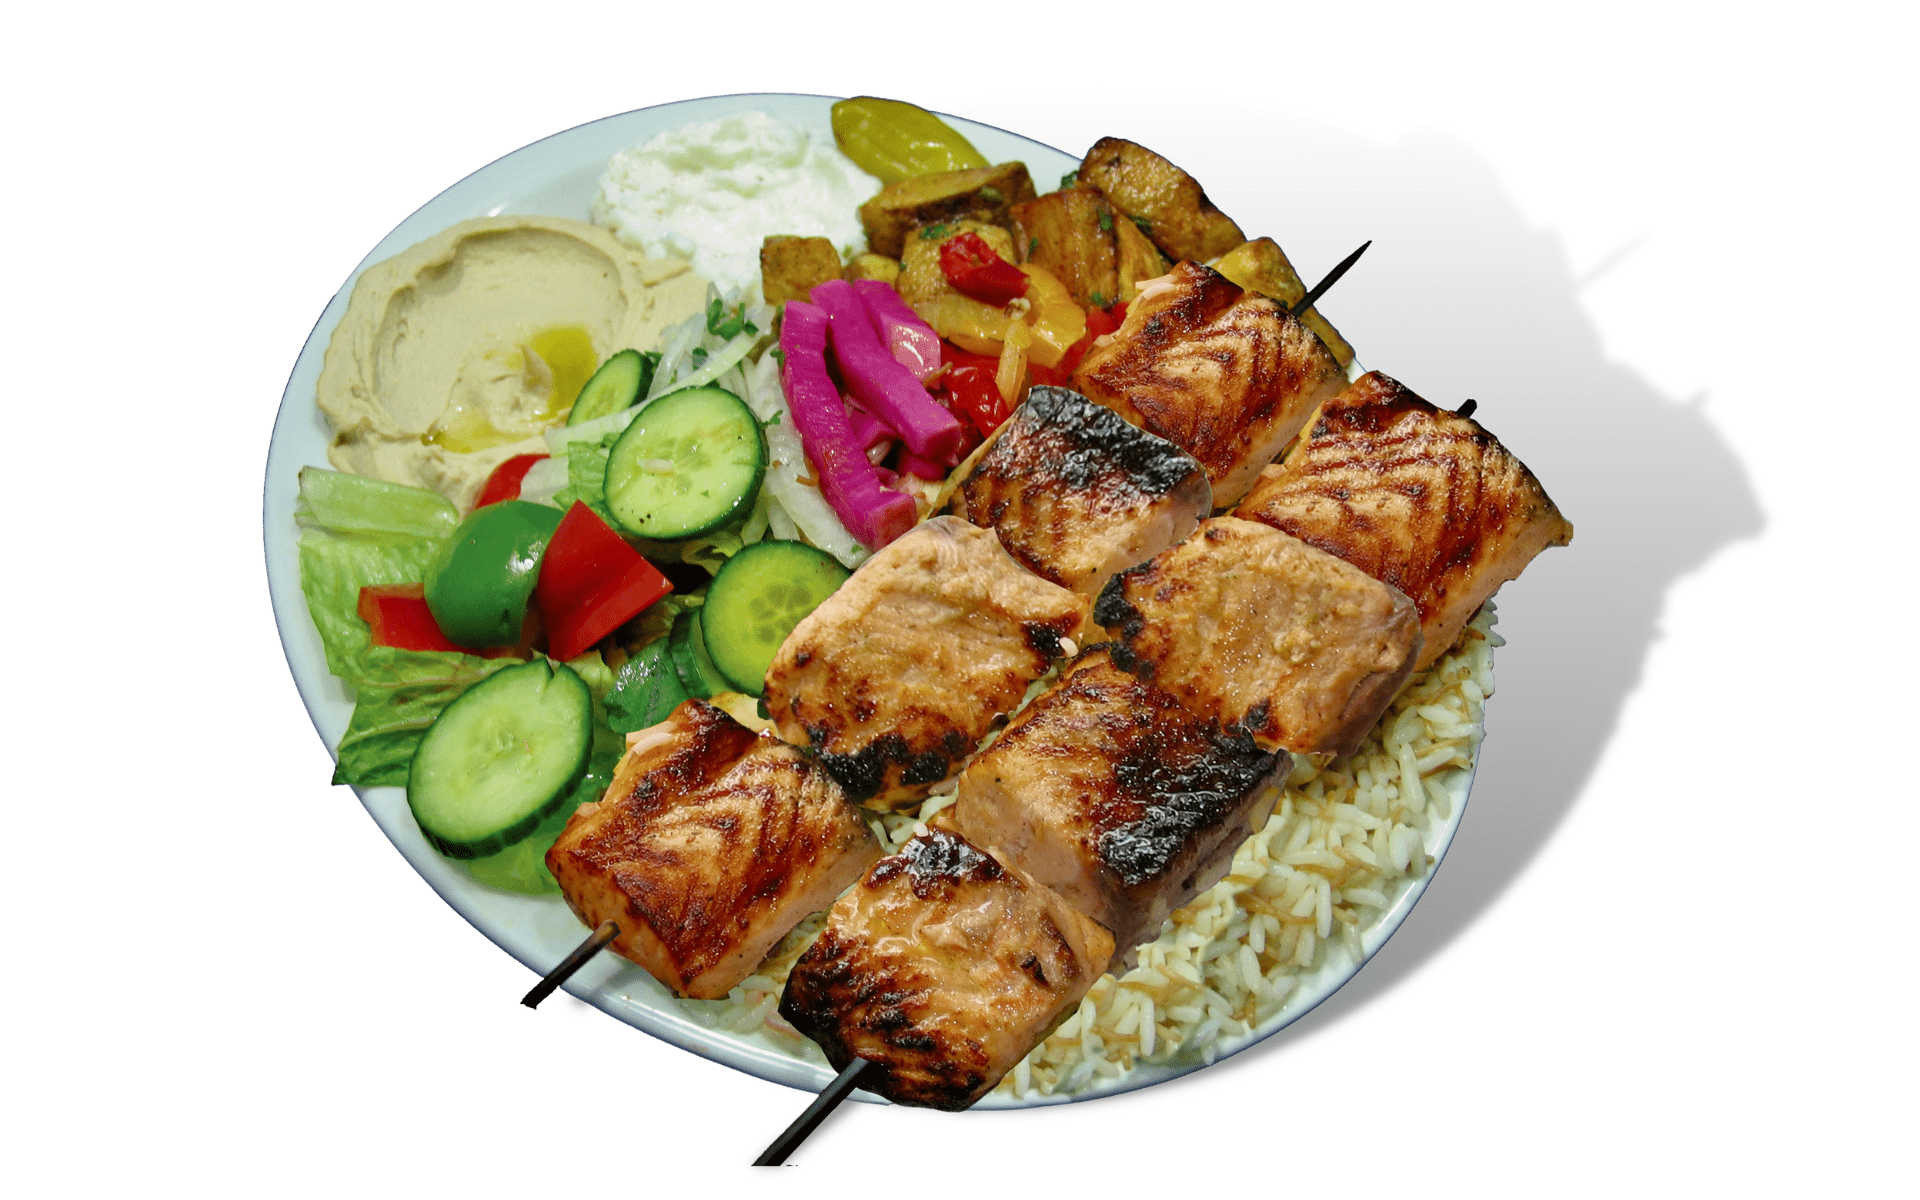 ottawa shawarma restaurant fish menu